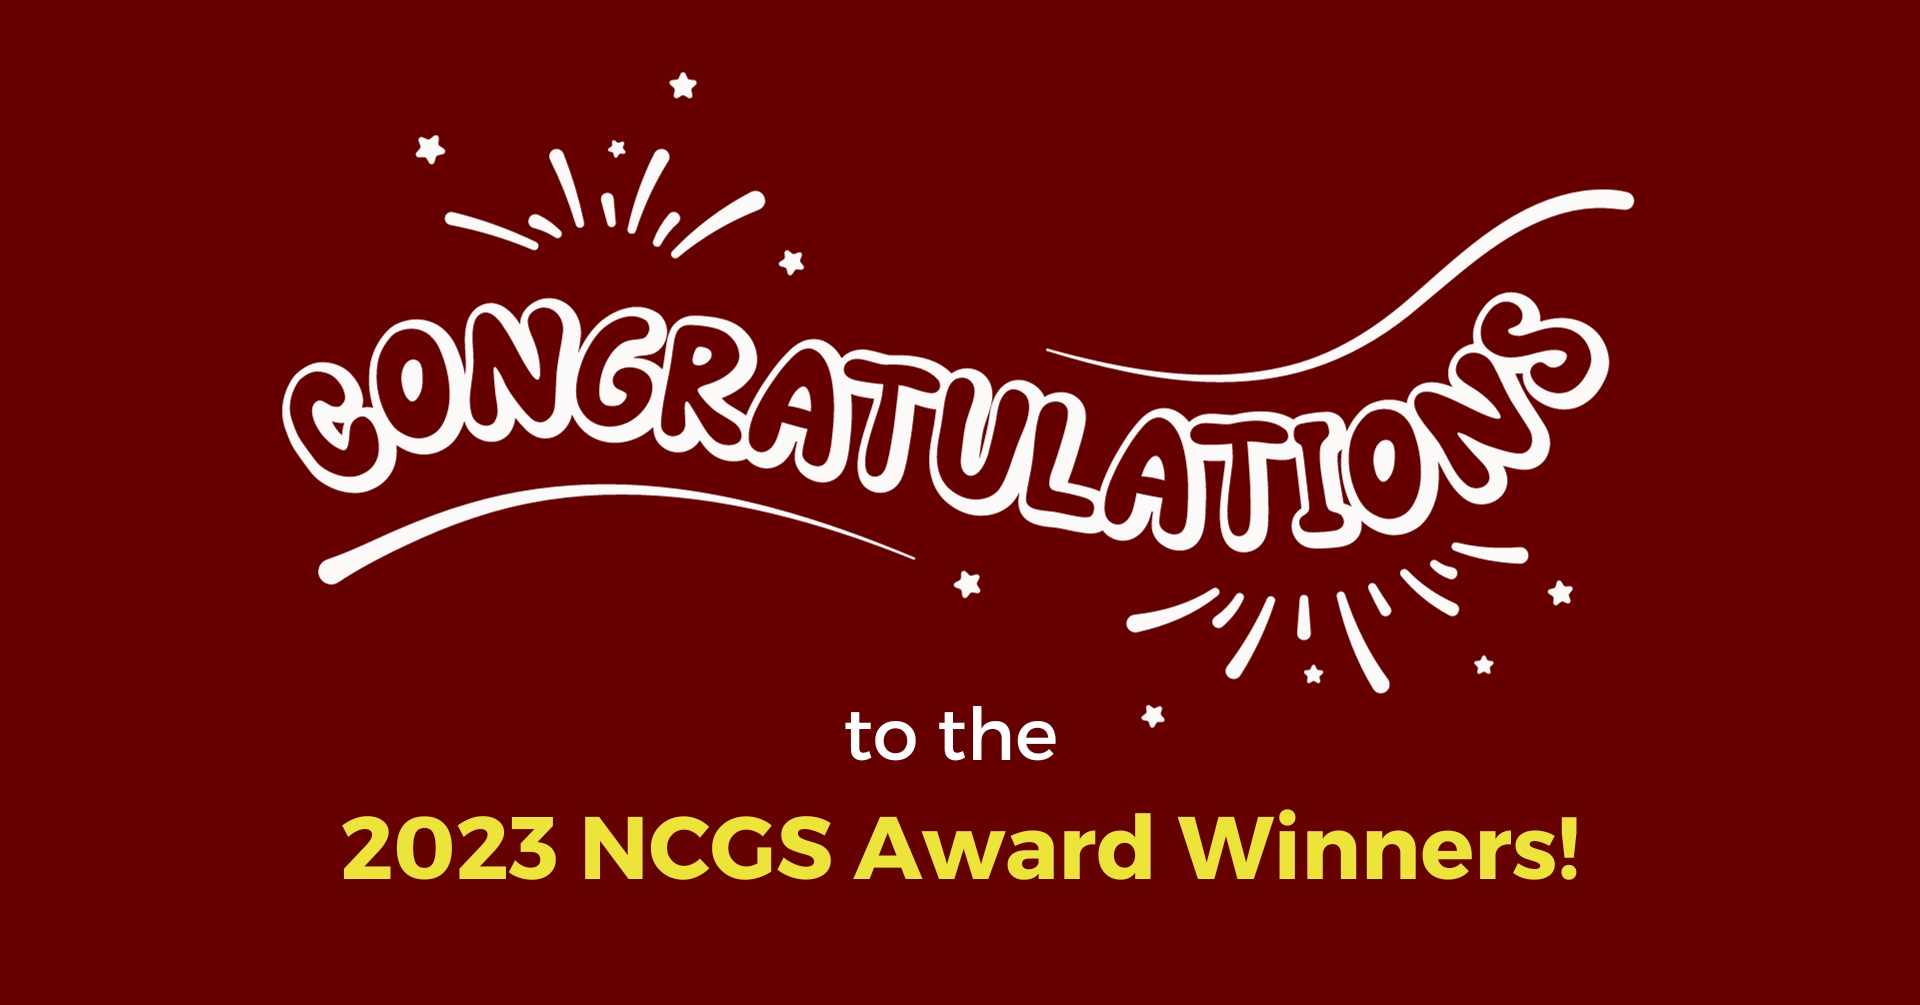 Congratulations to the 2023 NCGS Award Winners